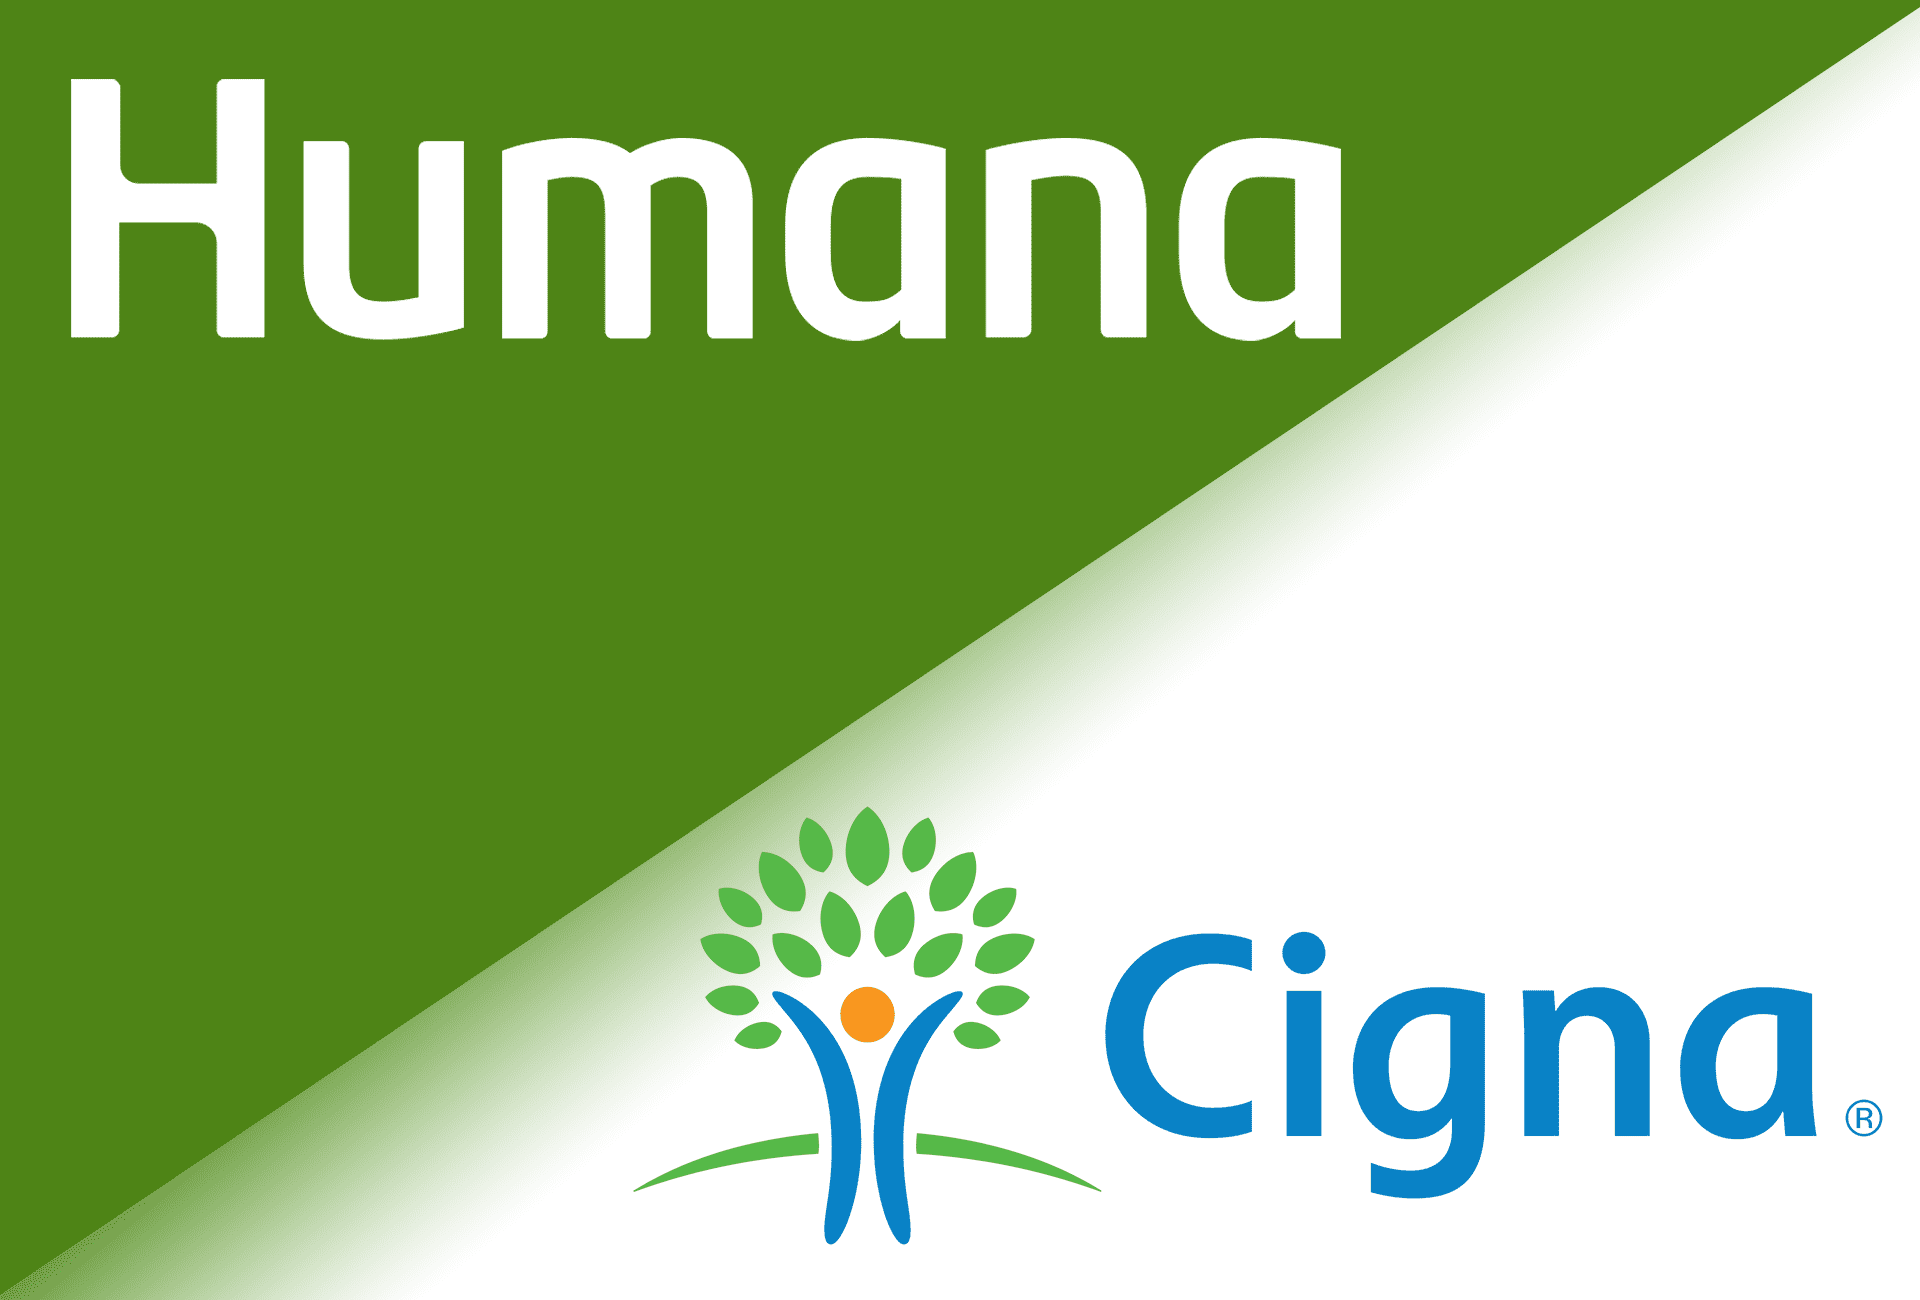 Humana and Cigna logos and premium reduced companies.